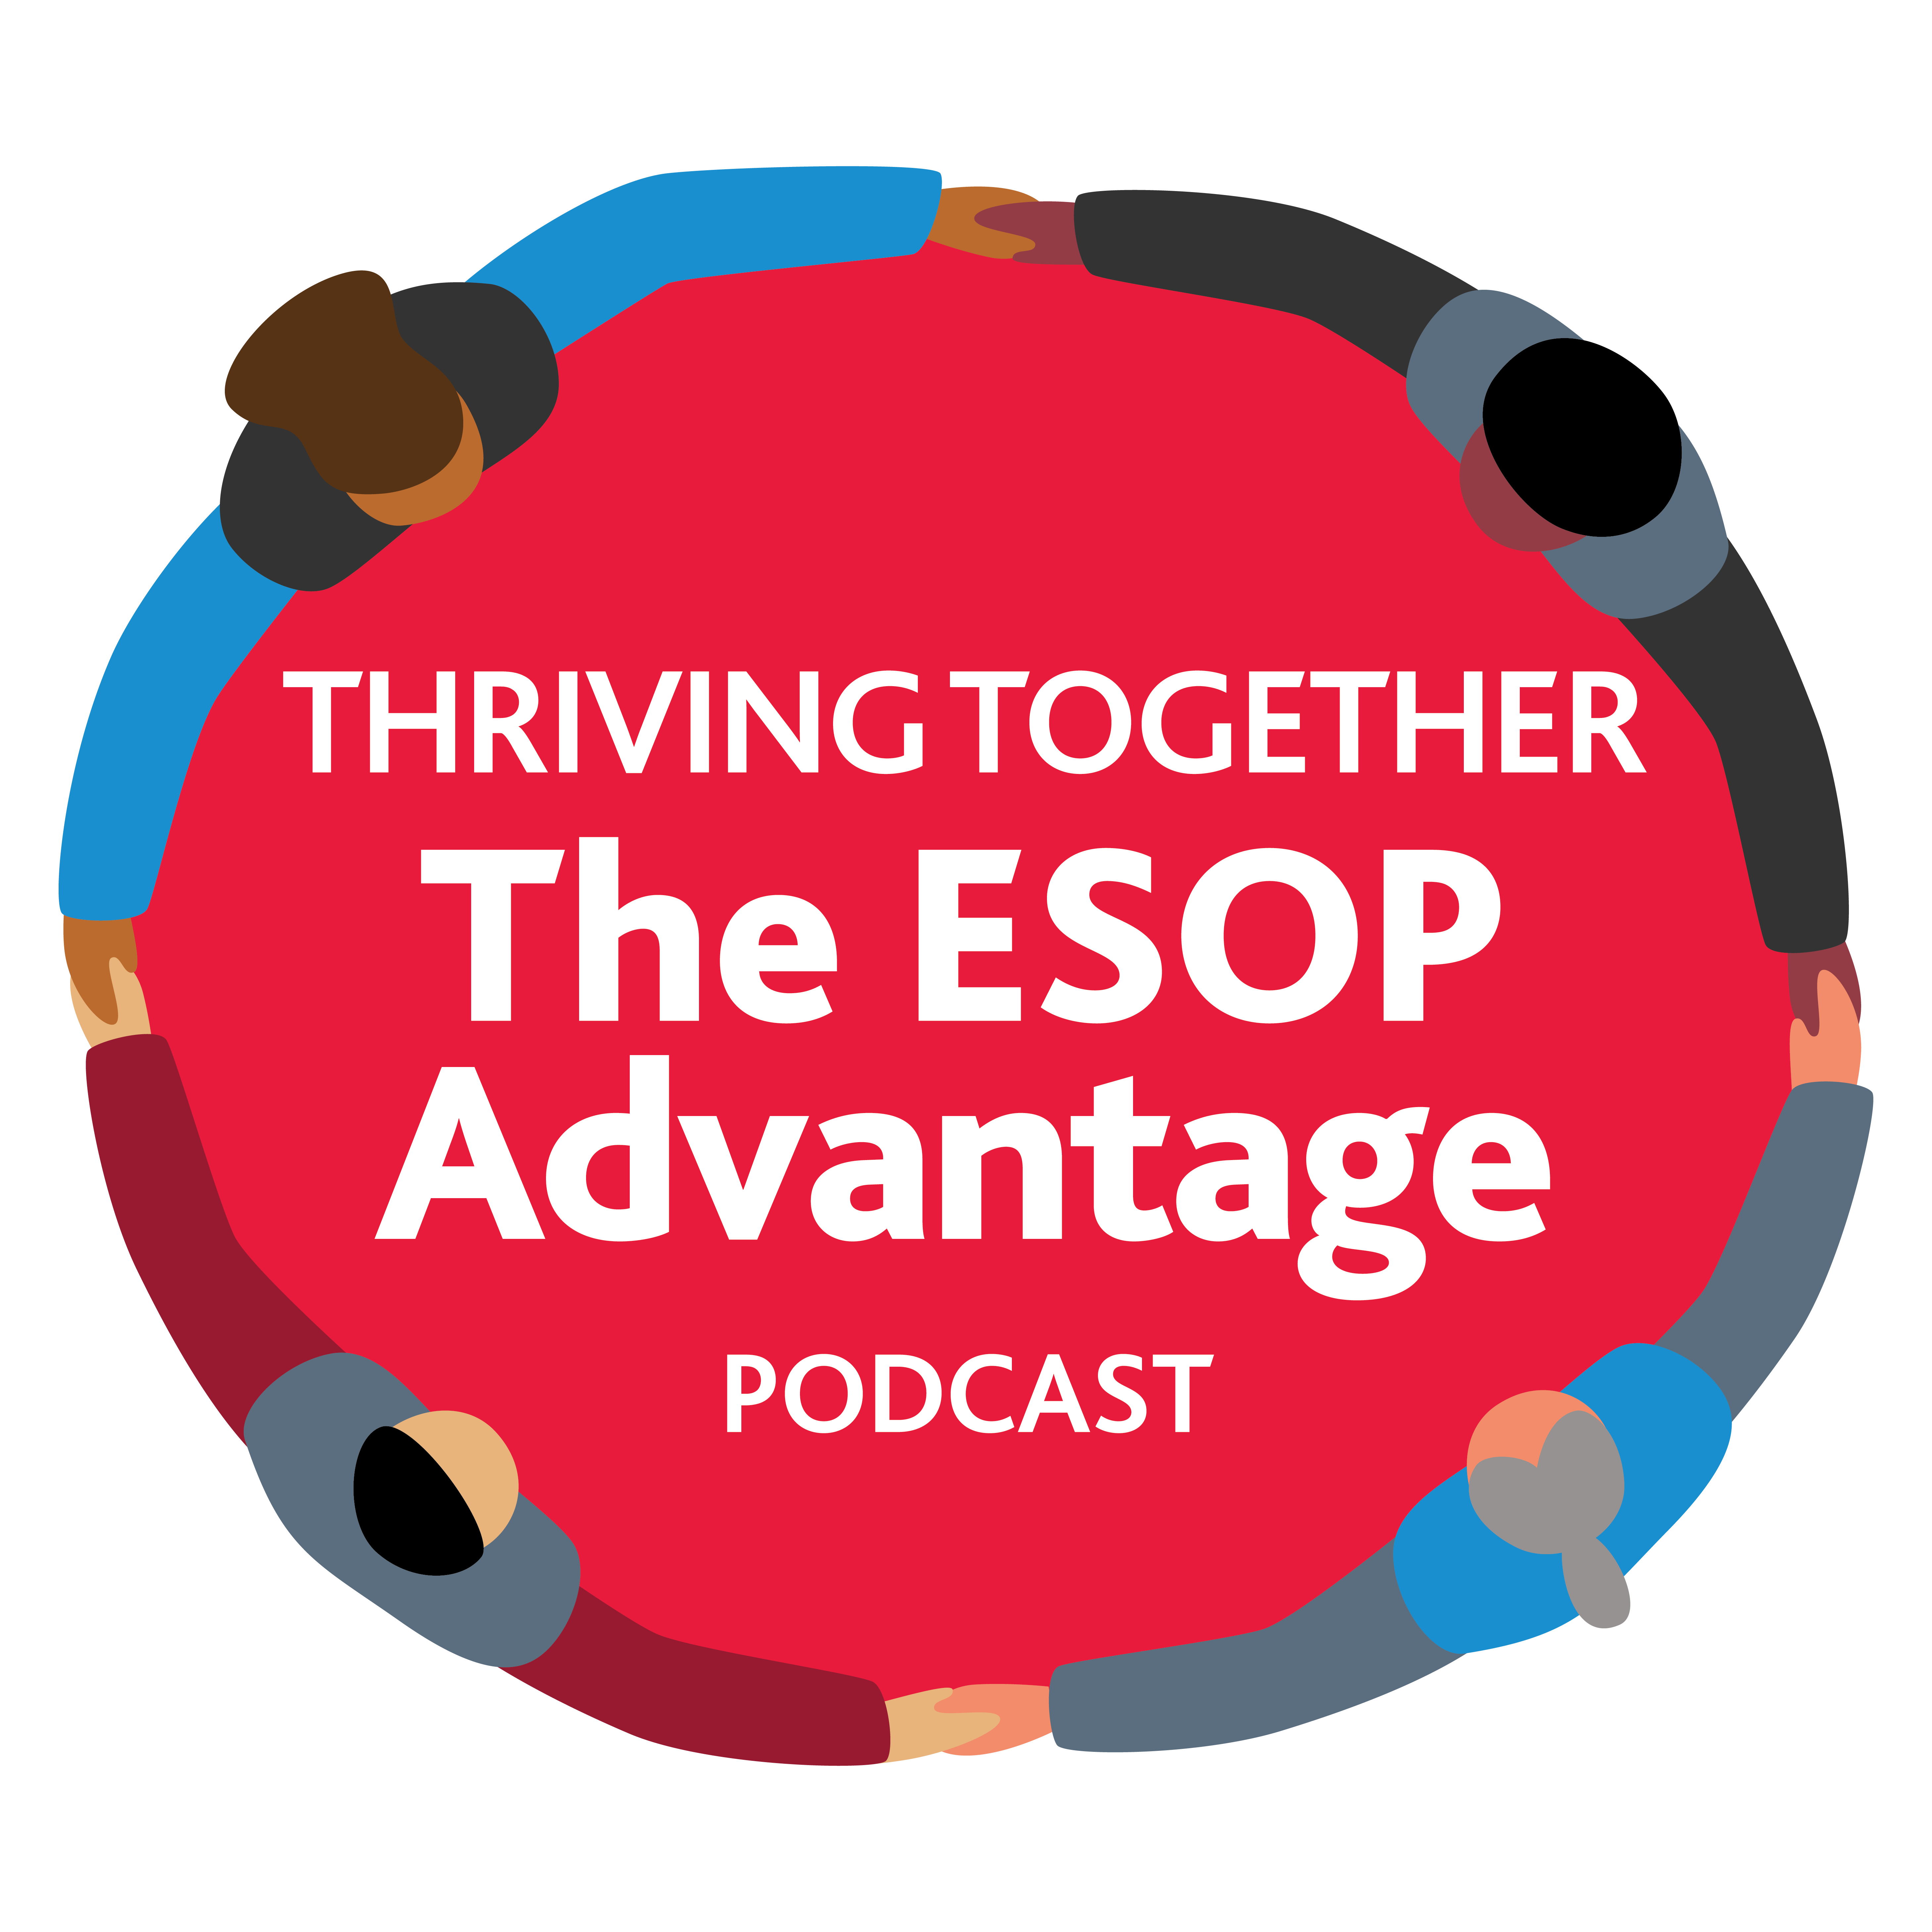 Thriving Together The ESOP Advantage Podcast Mark